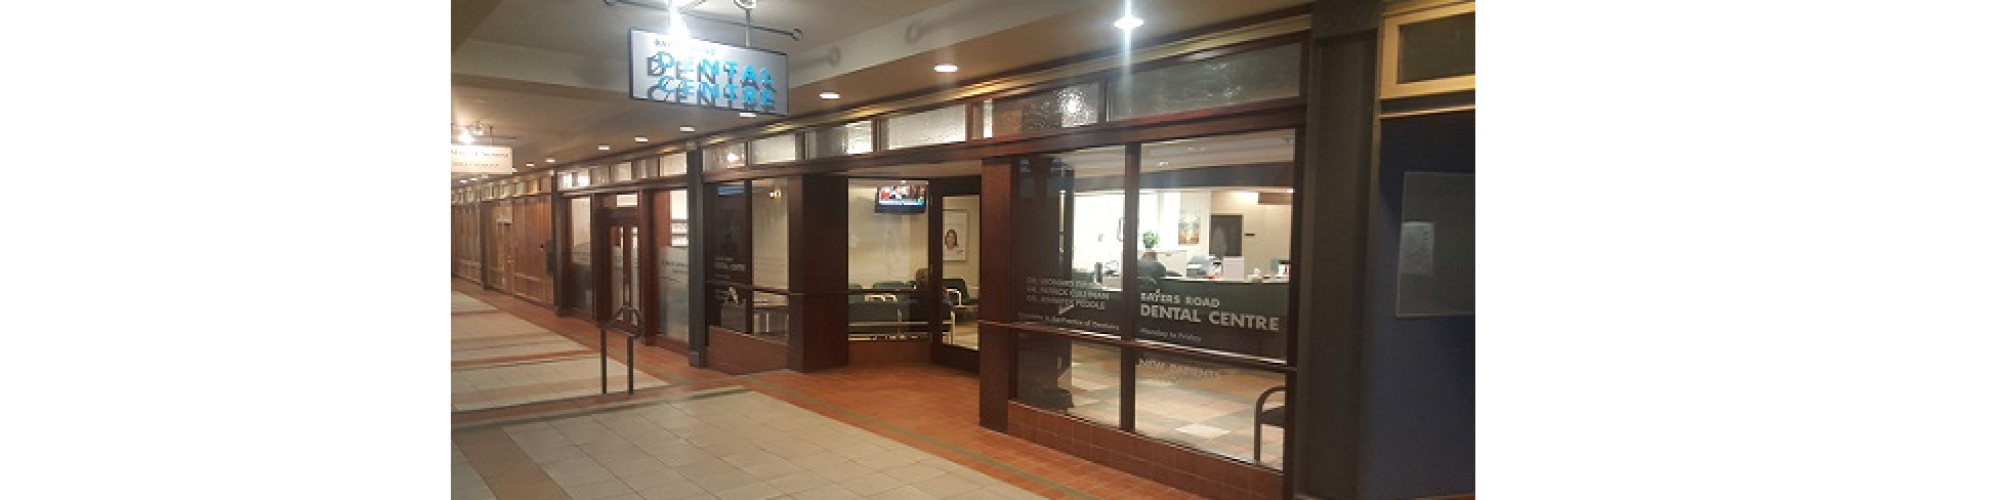 Bayers Road Dental Centre